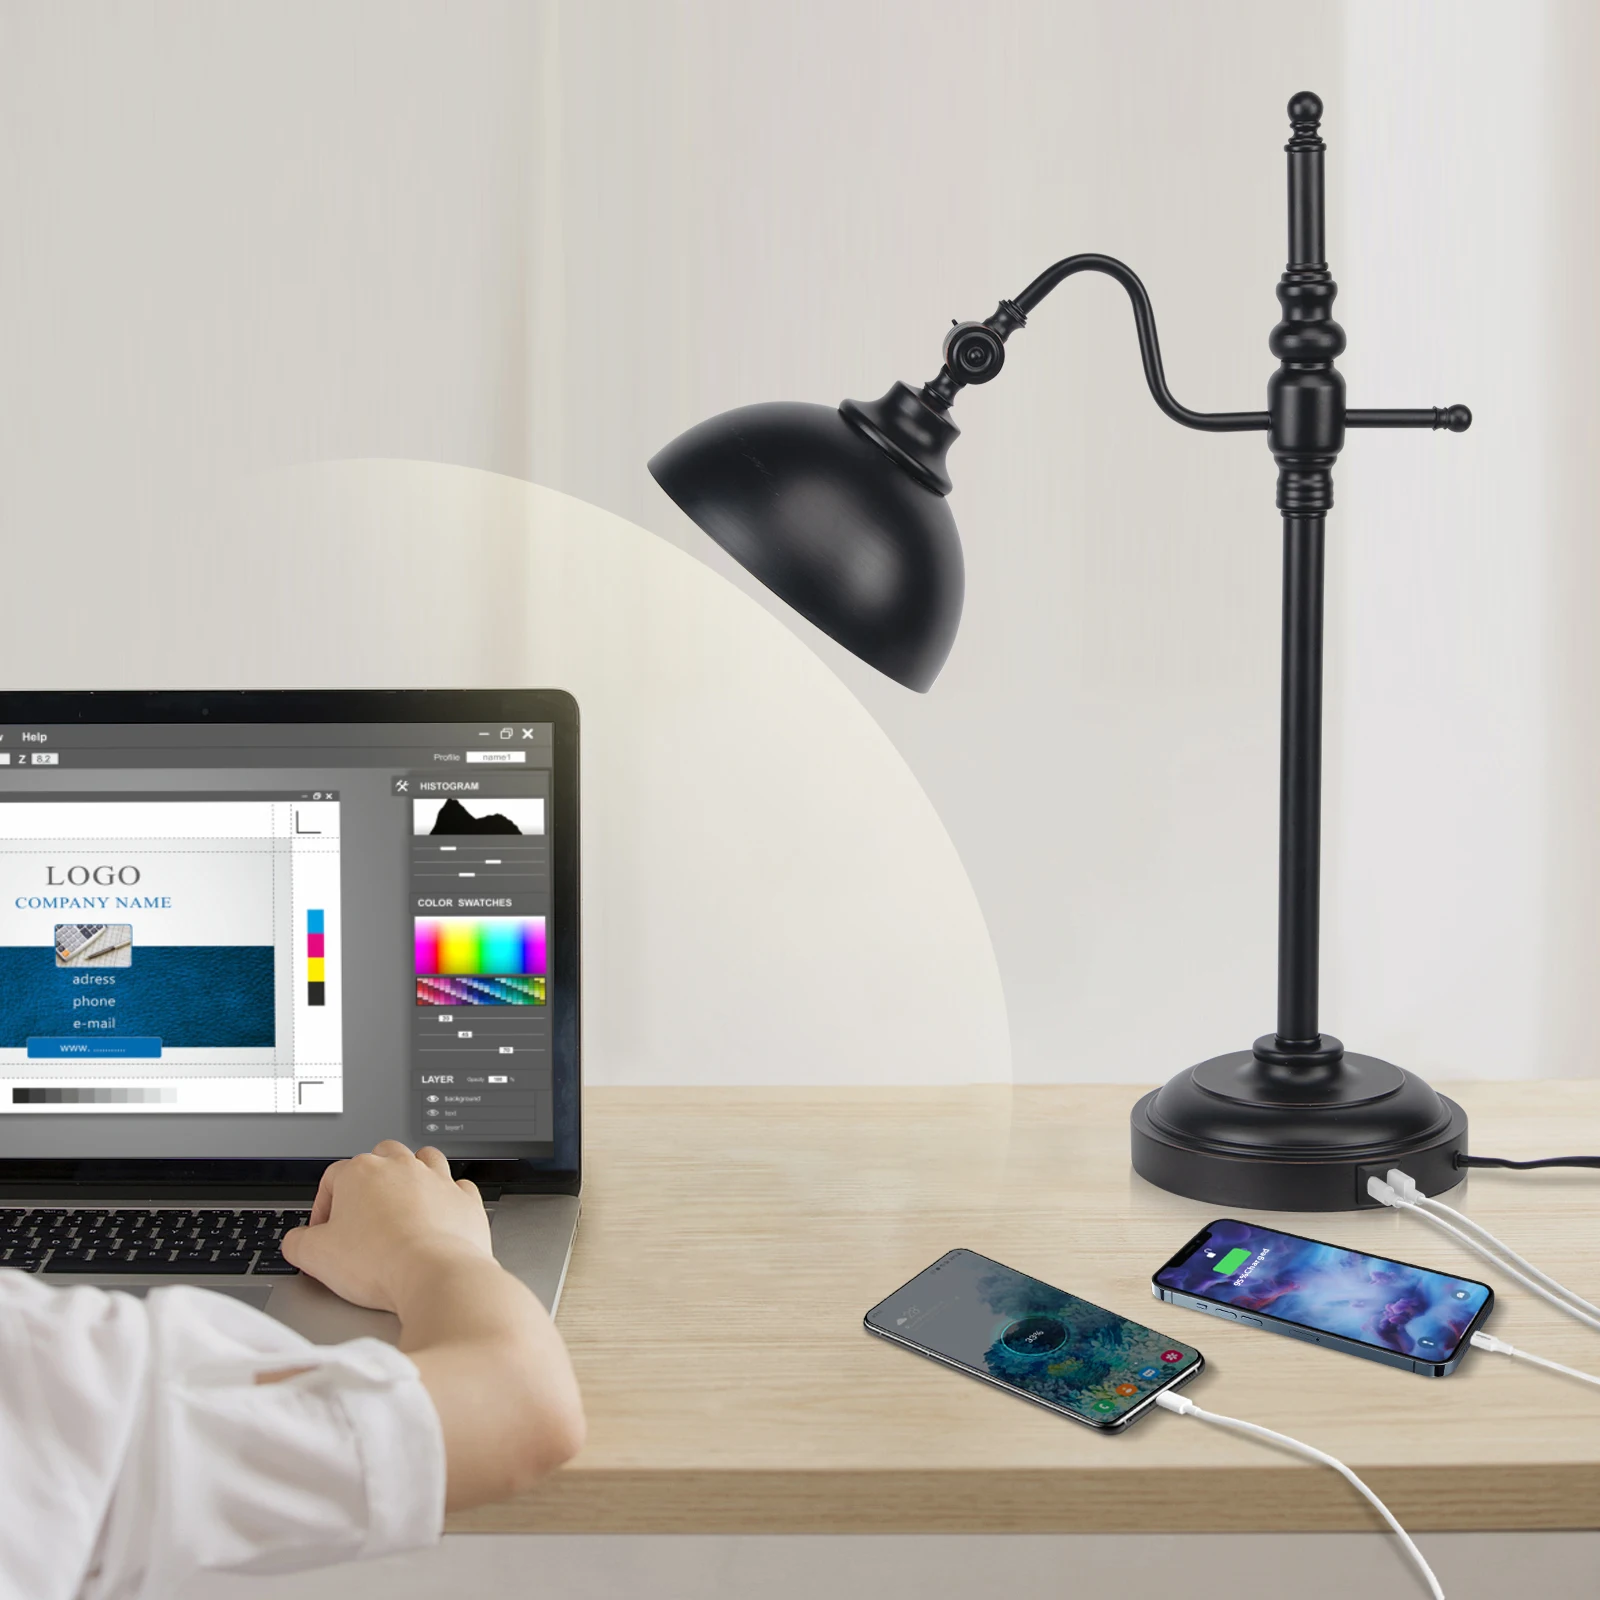 Lampe de table en mai avec port USB